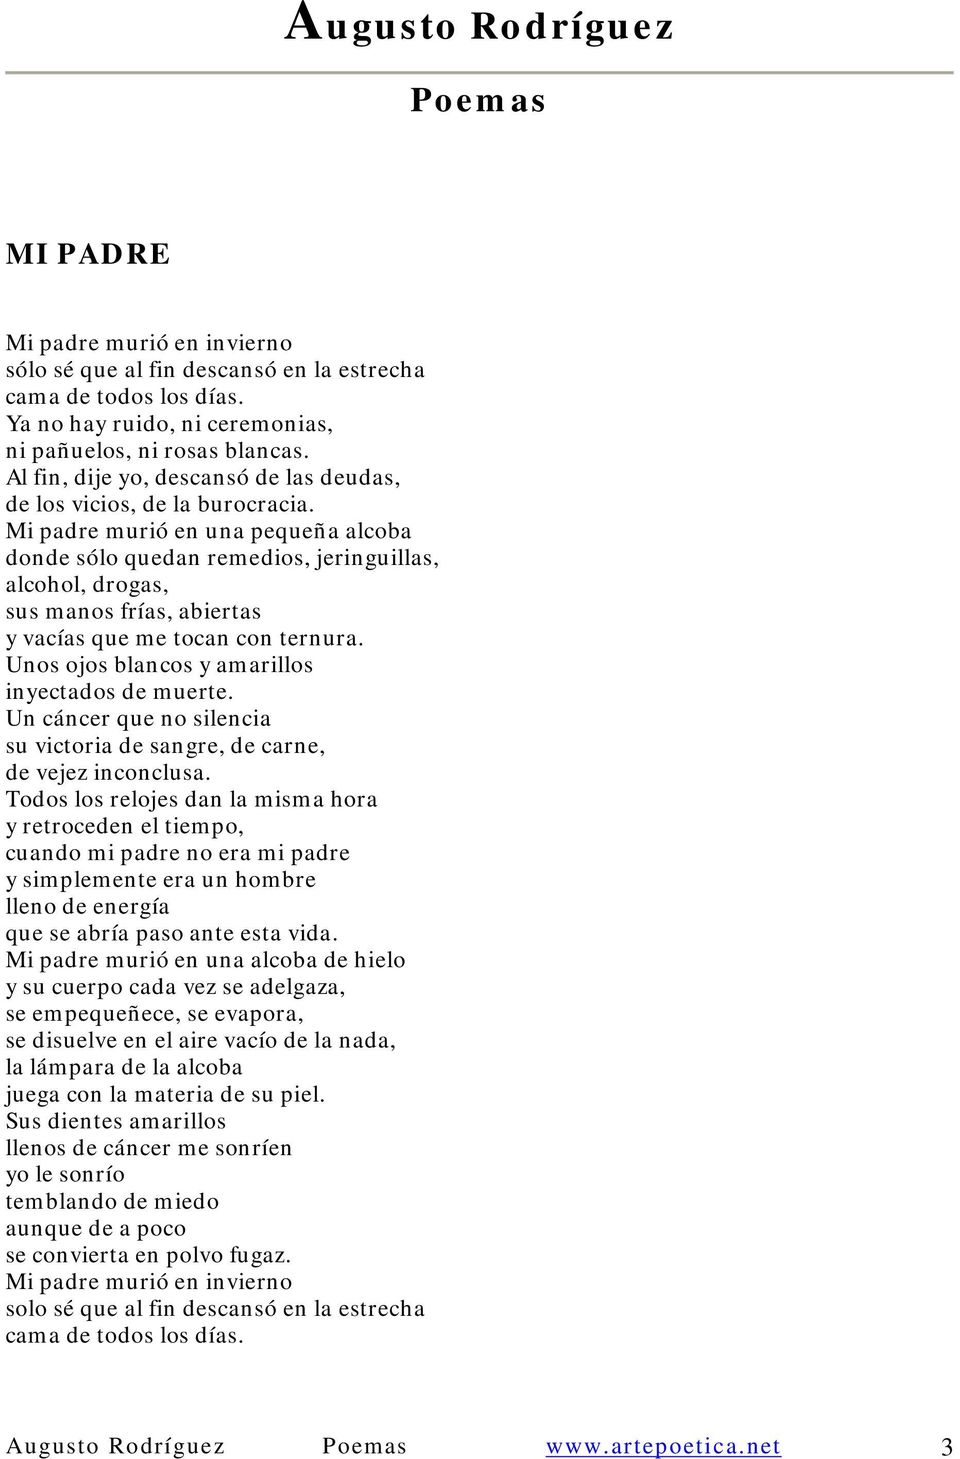 Augusto Rodríguez. Poemas ADIÓS PADRE - PDF Free Download